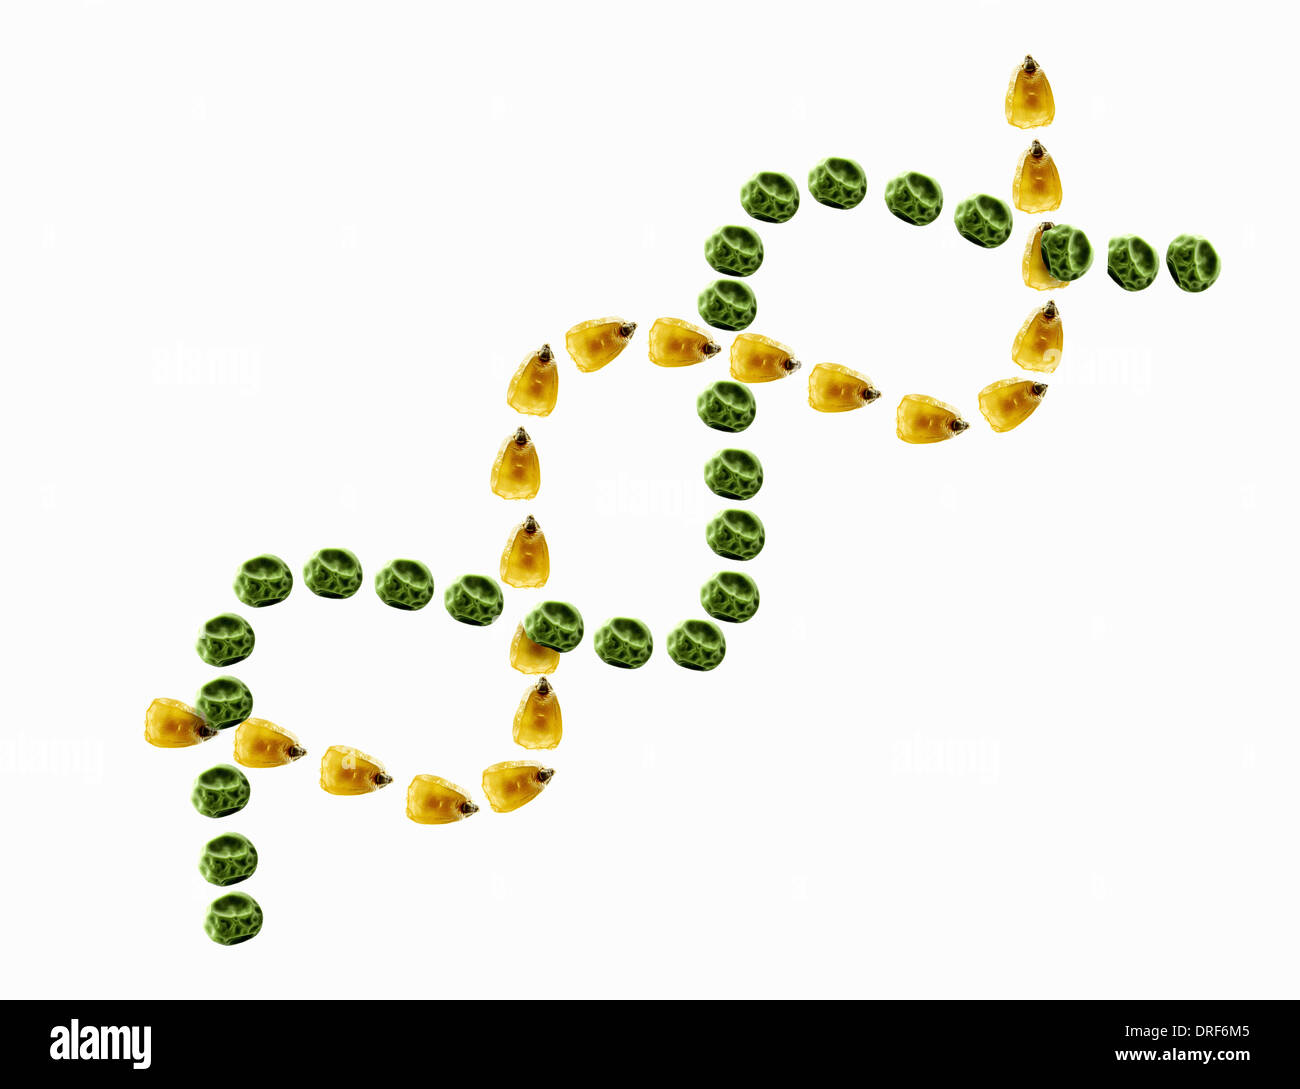 double helix maize peas symbol genetic engineering Stock Photo